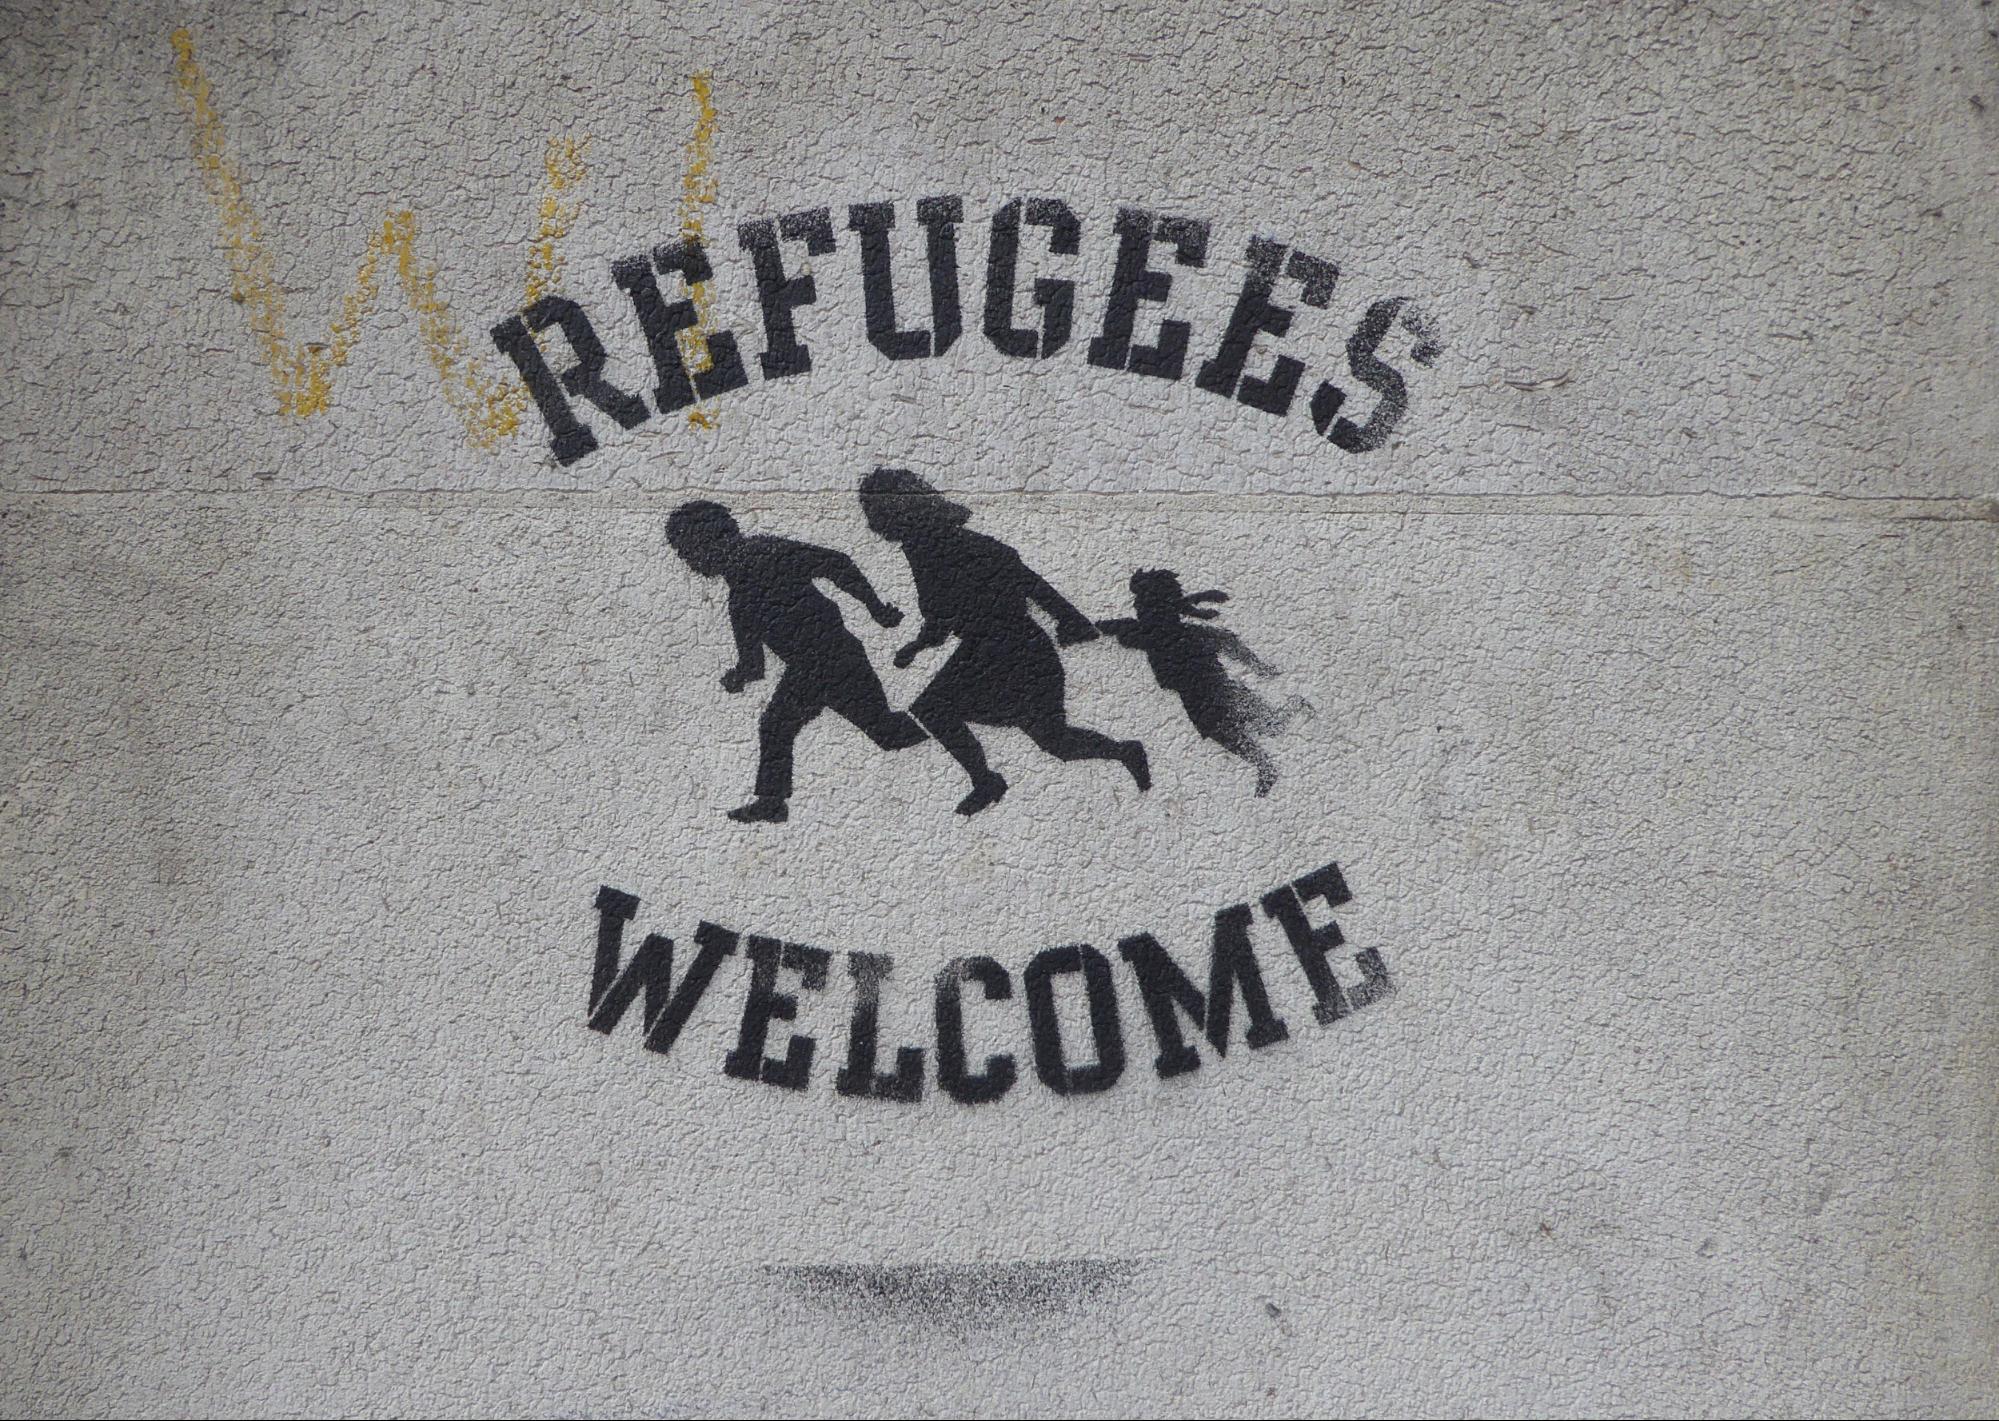 Sign on wall saying "Refugeeswelcome"